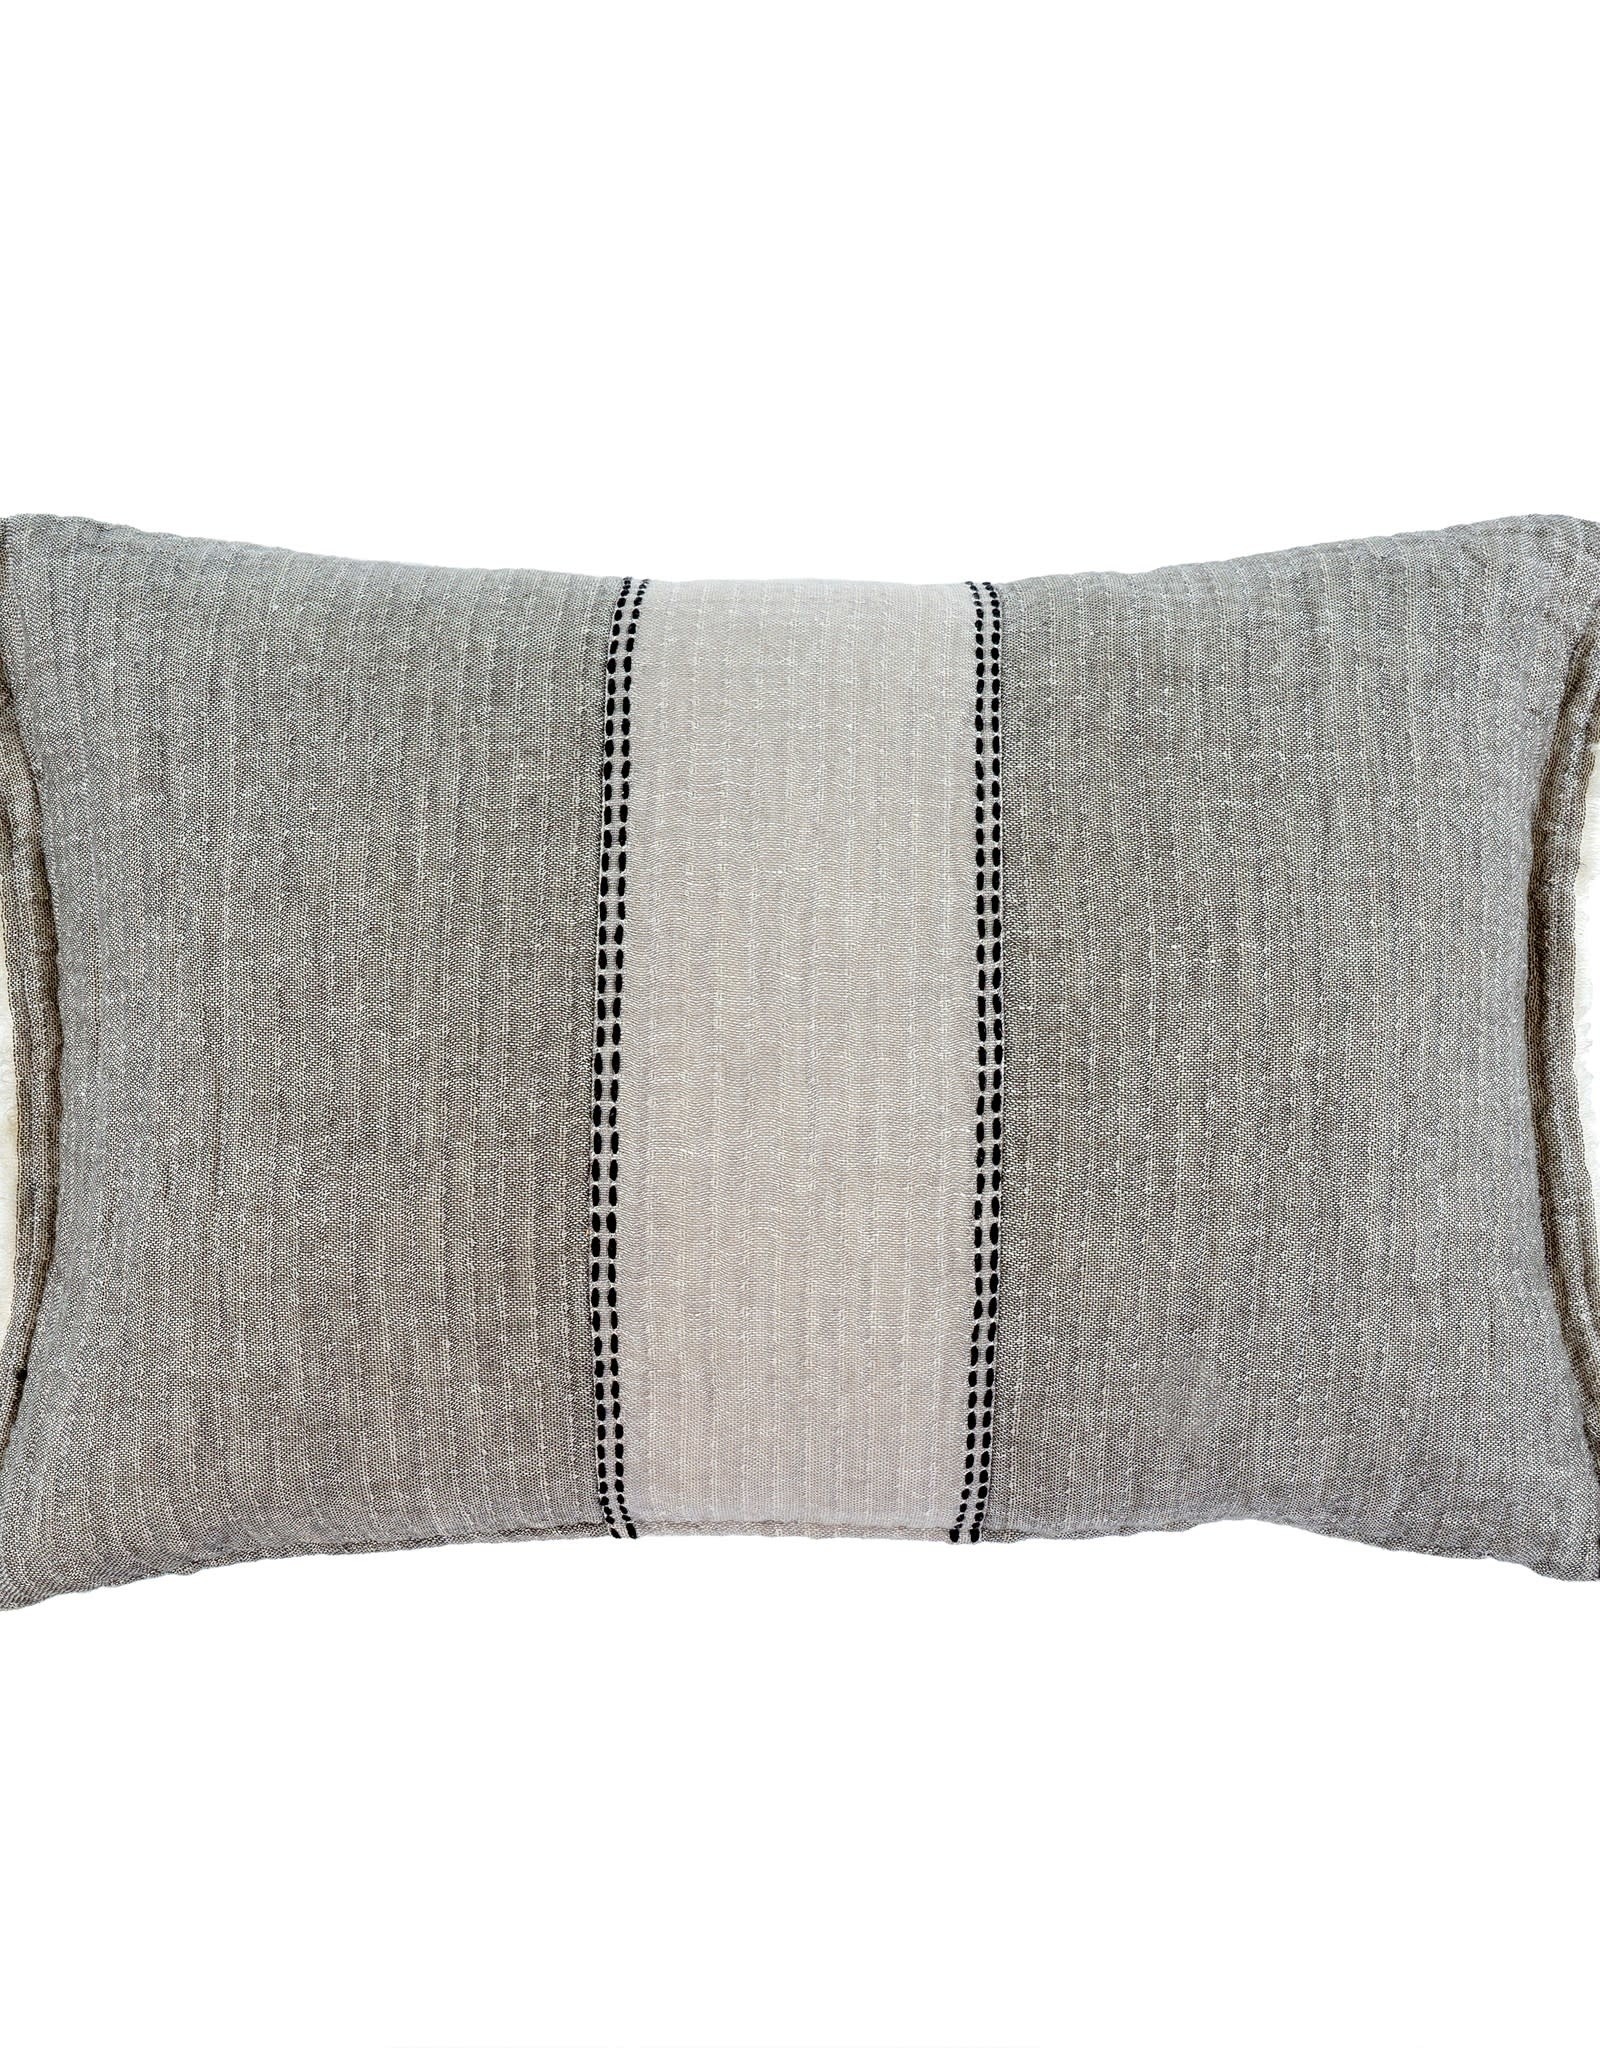 Kantha Patch Pillow Grey - 16x24